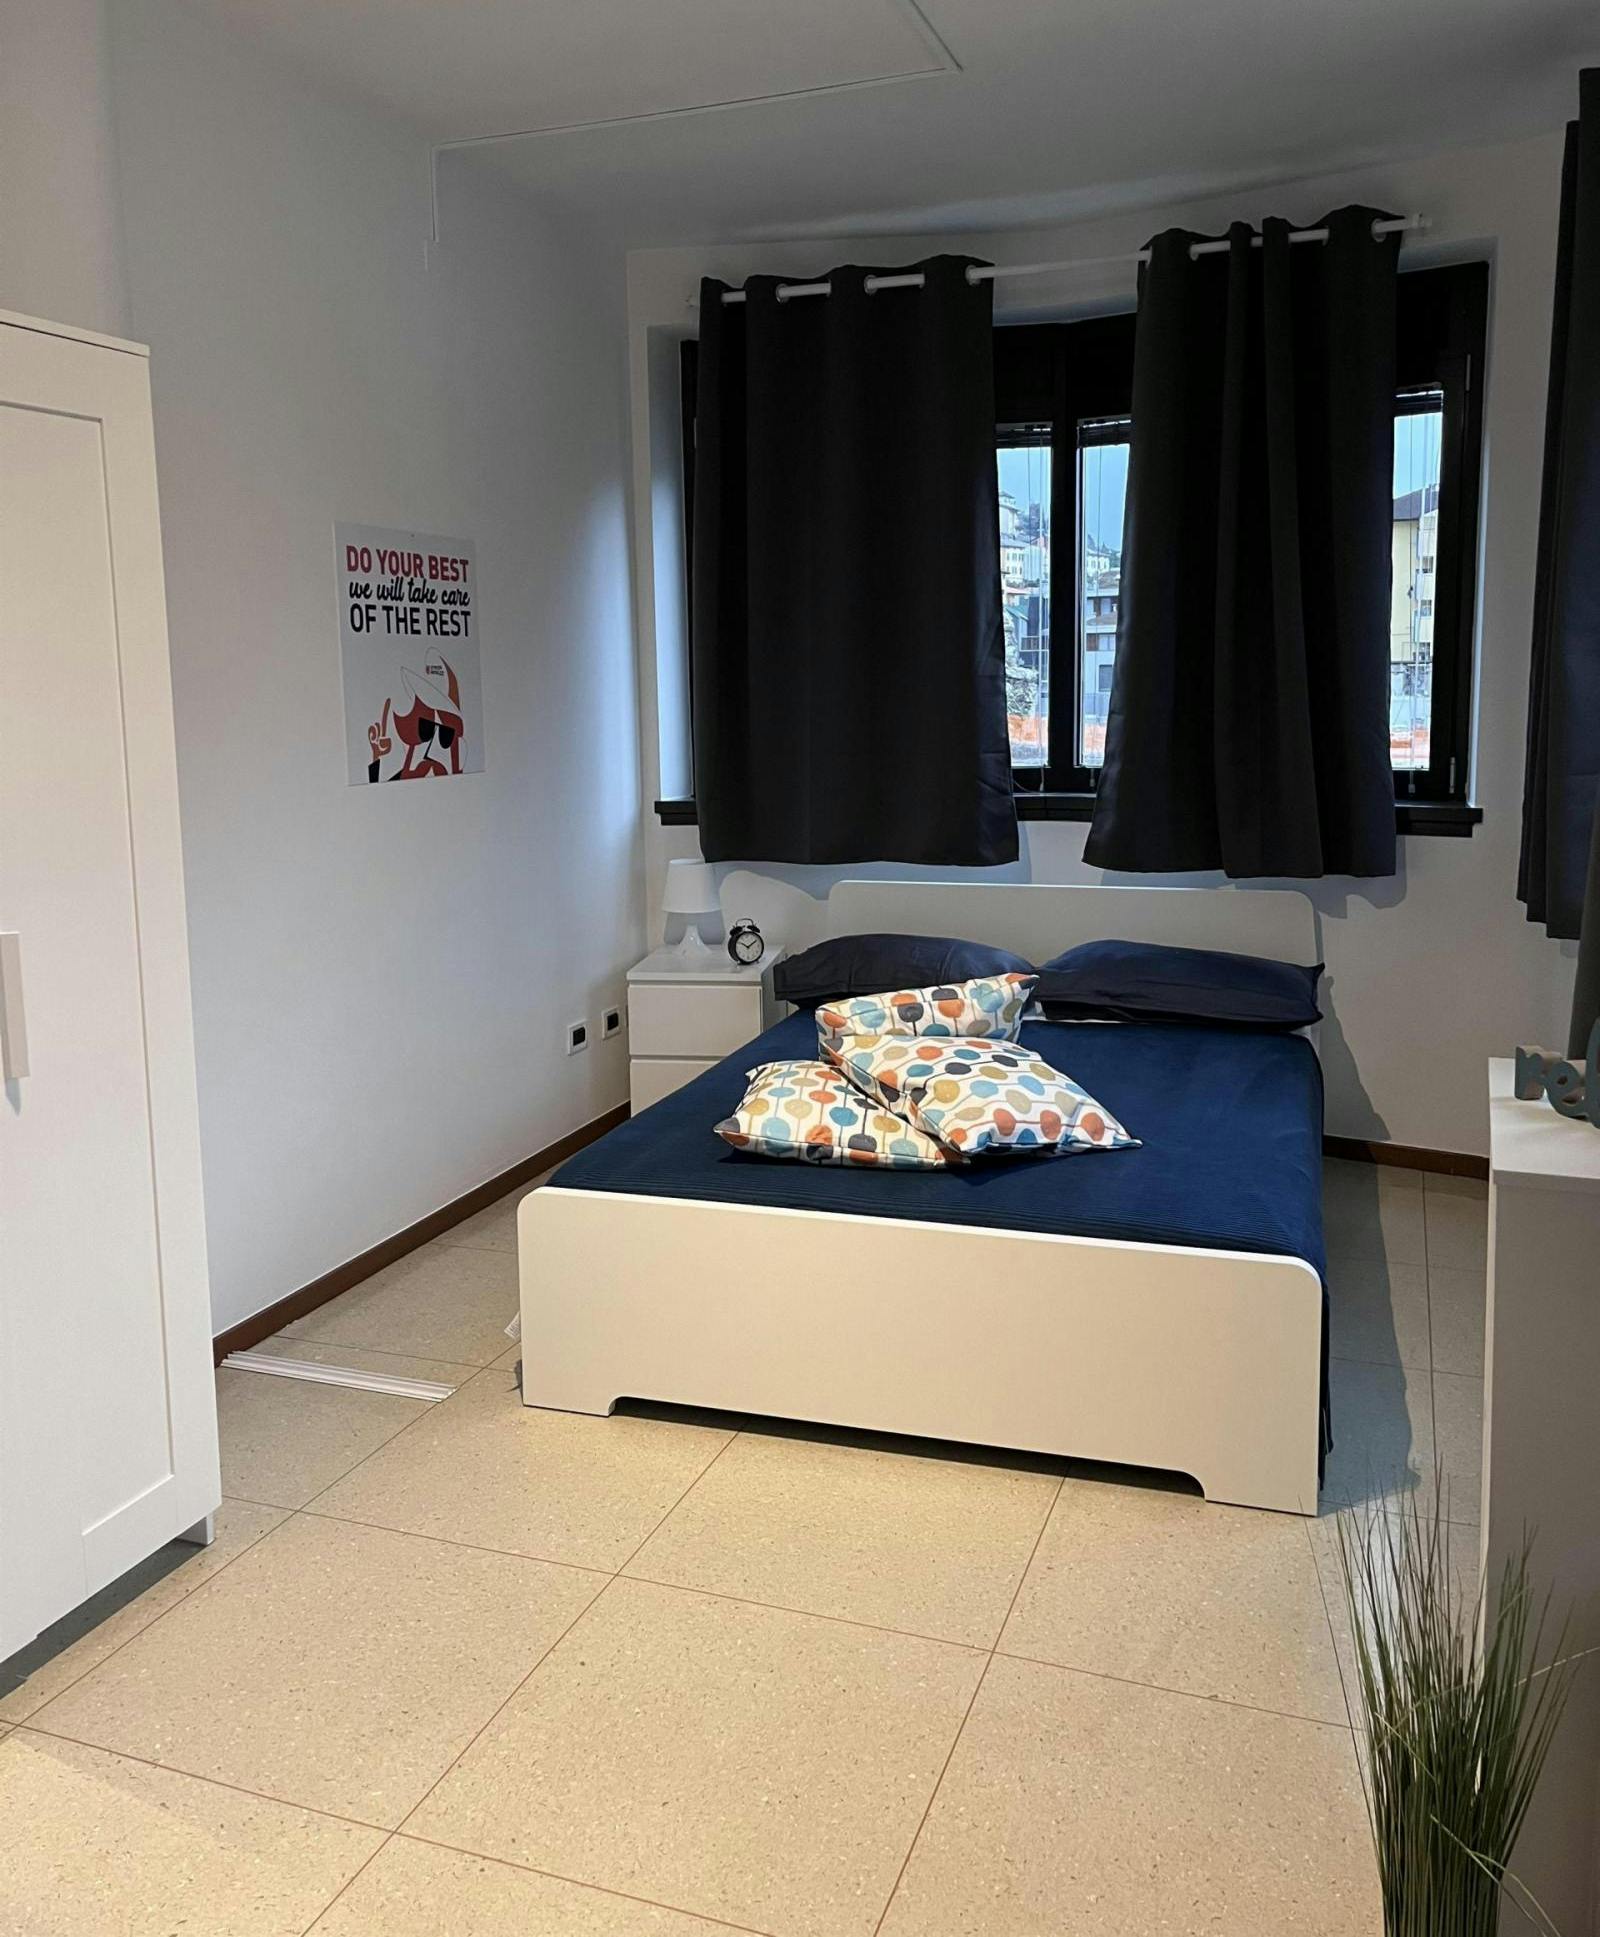 Appealing single bedroom near the Trento ftm train station